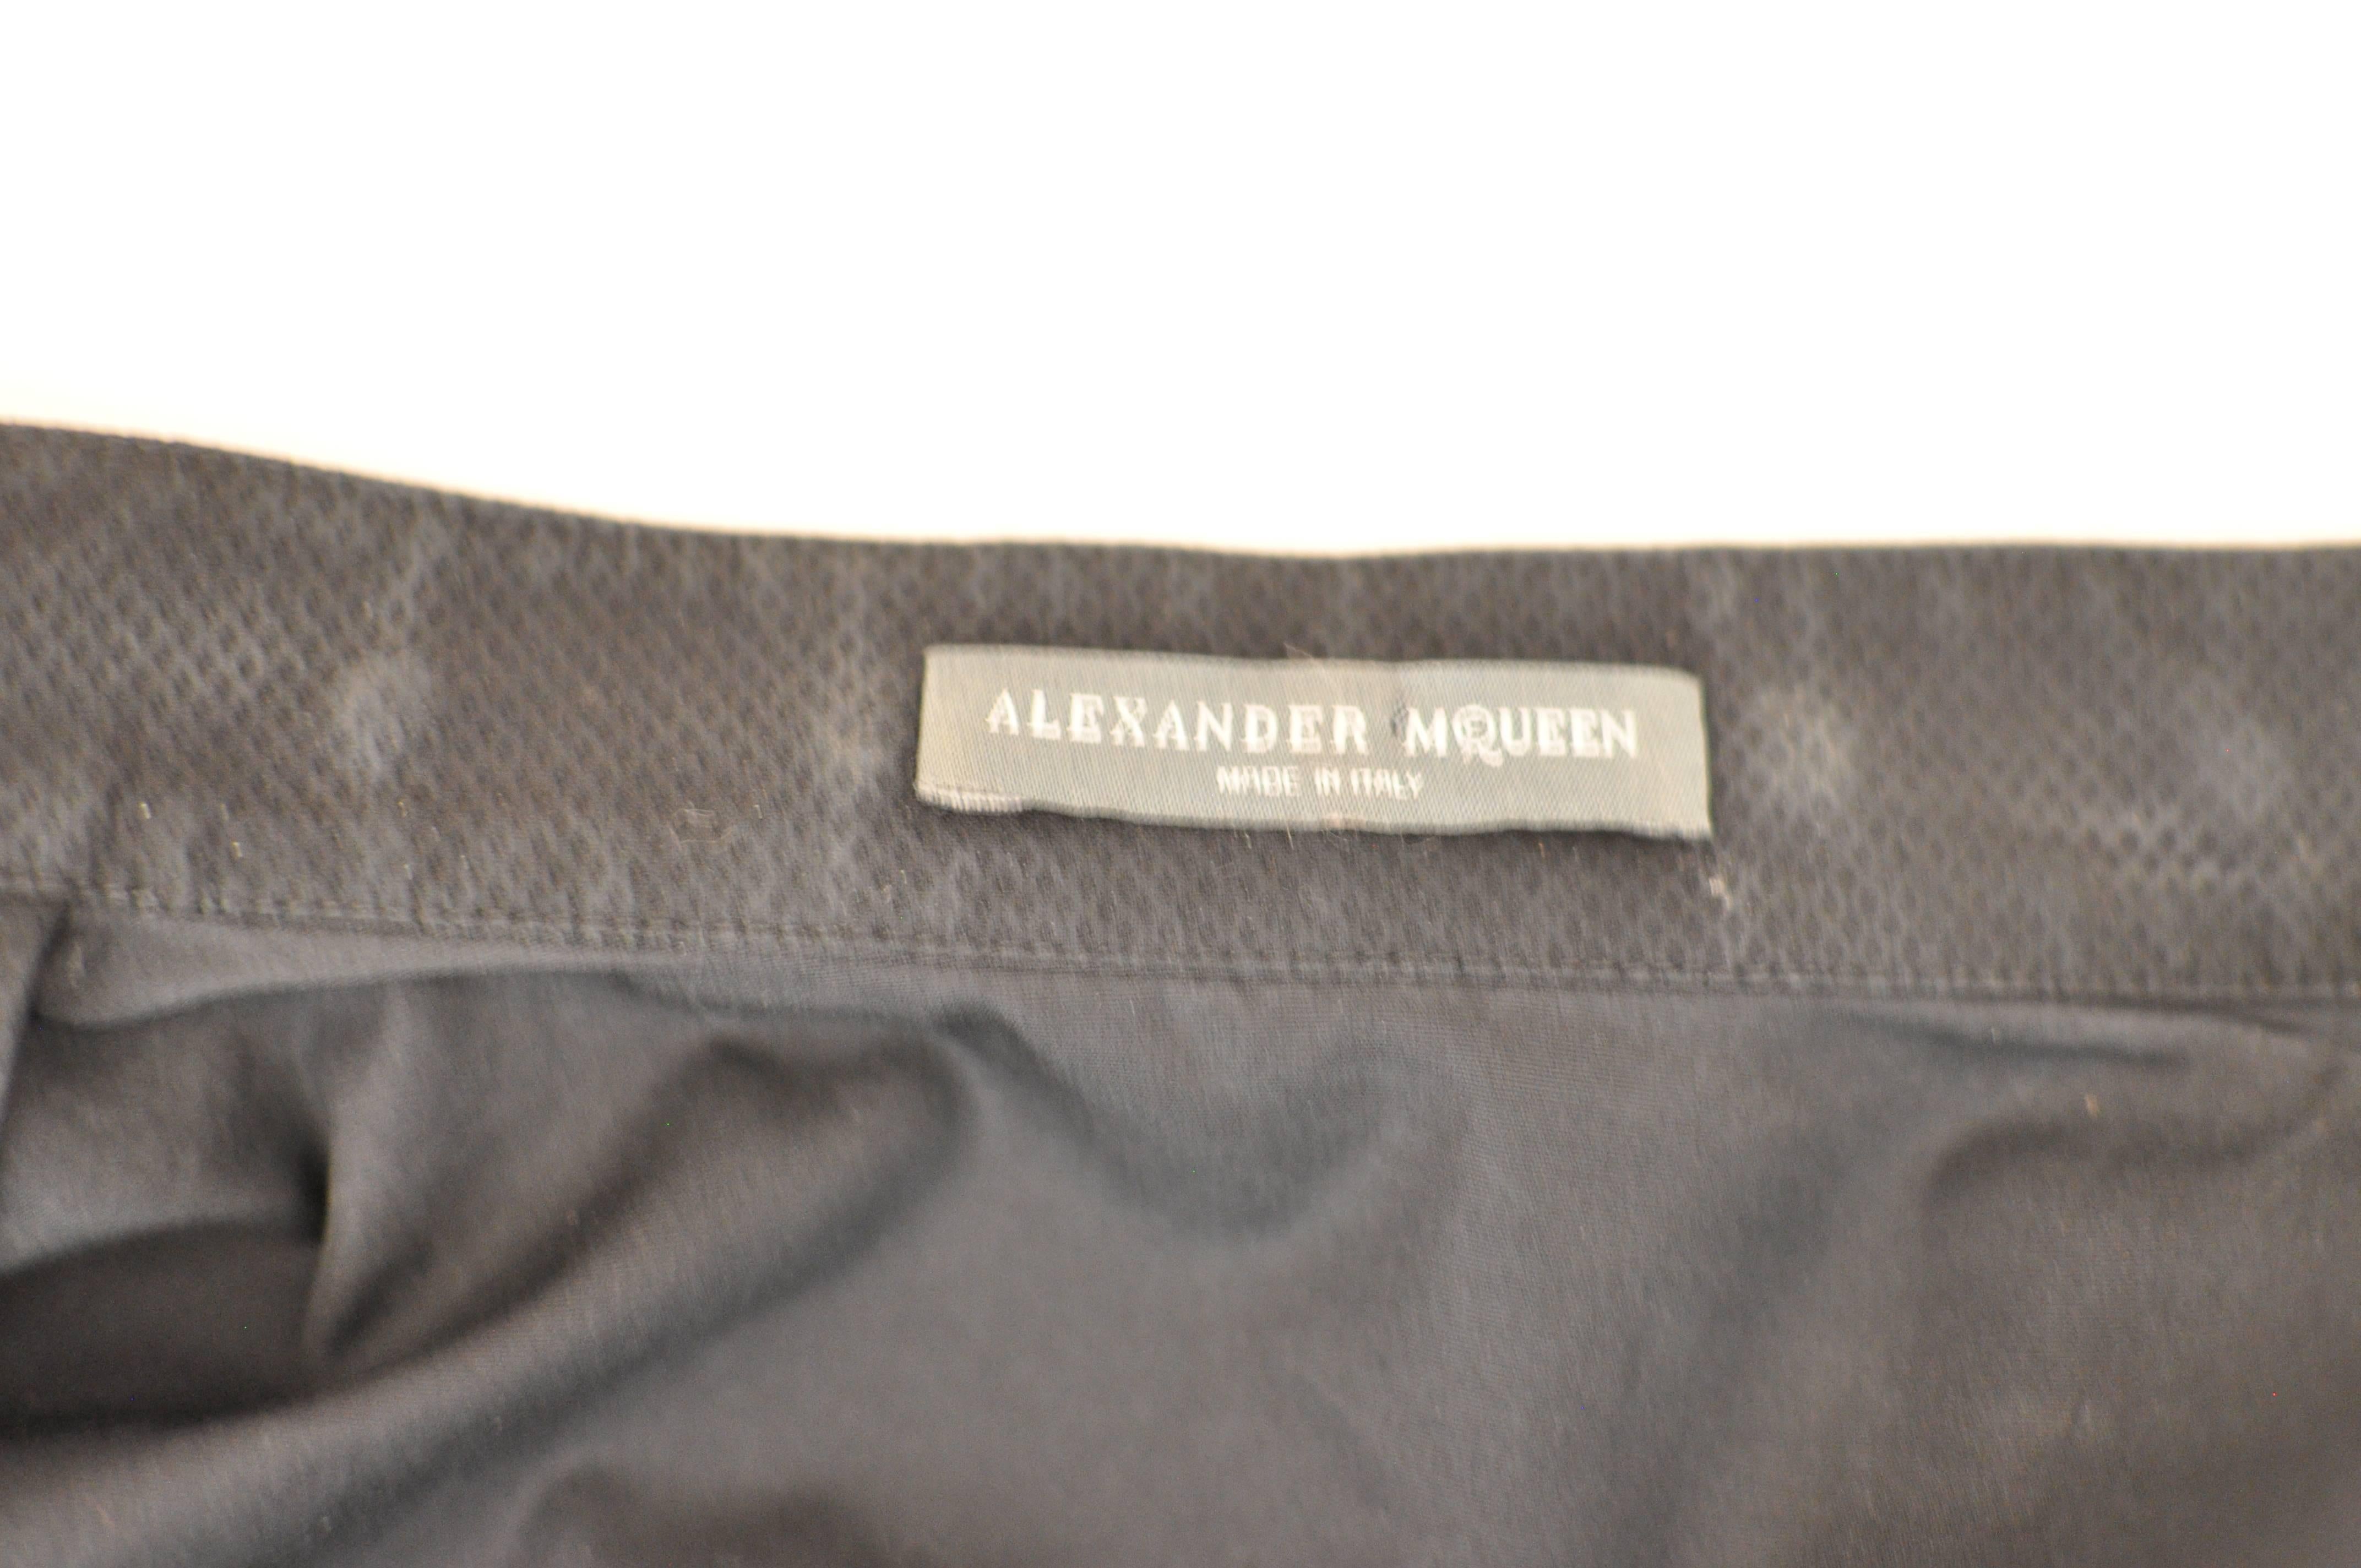 Superb 2014 Alexander McQueen Black Stud Collar Tuxedo Shirt 38 (Itl) 3